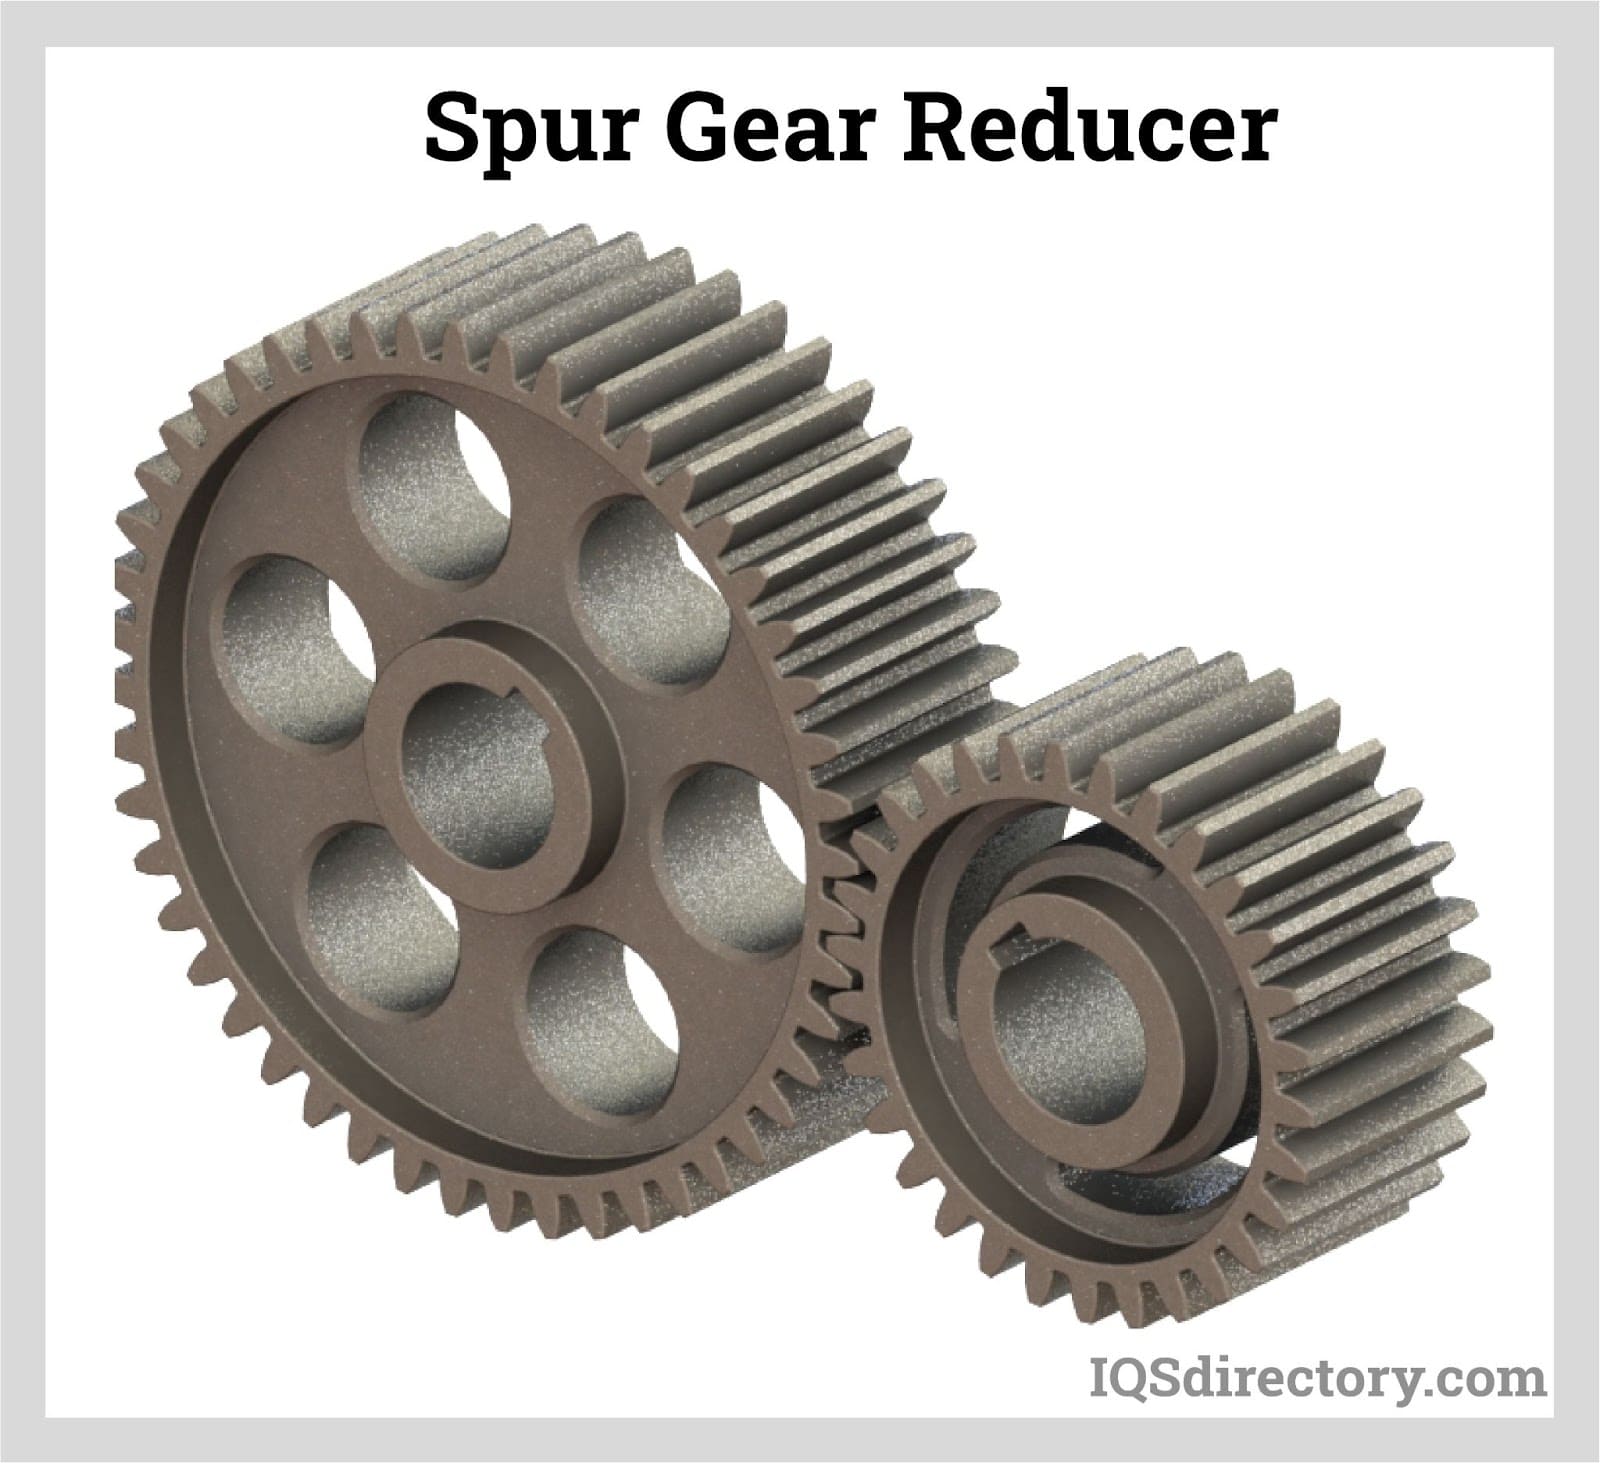 Spur Gear Reducer